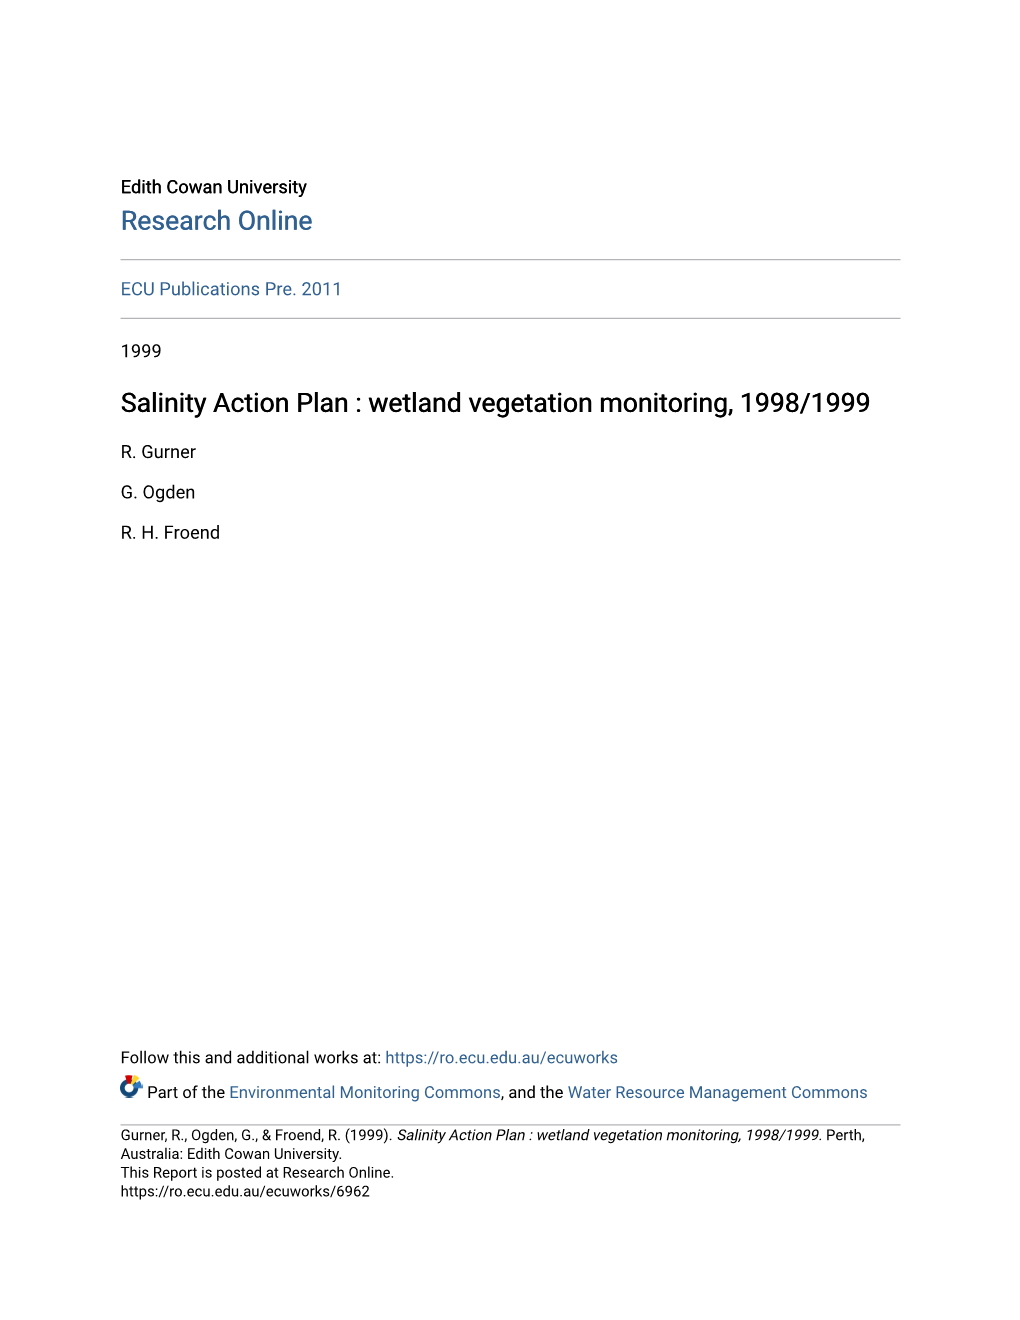 Salinity Action Plan : Wetland Vegetation Monitoring, 1998/1999